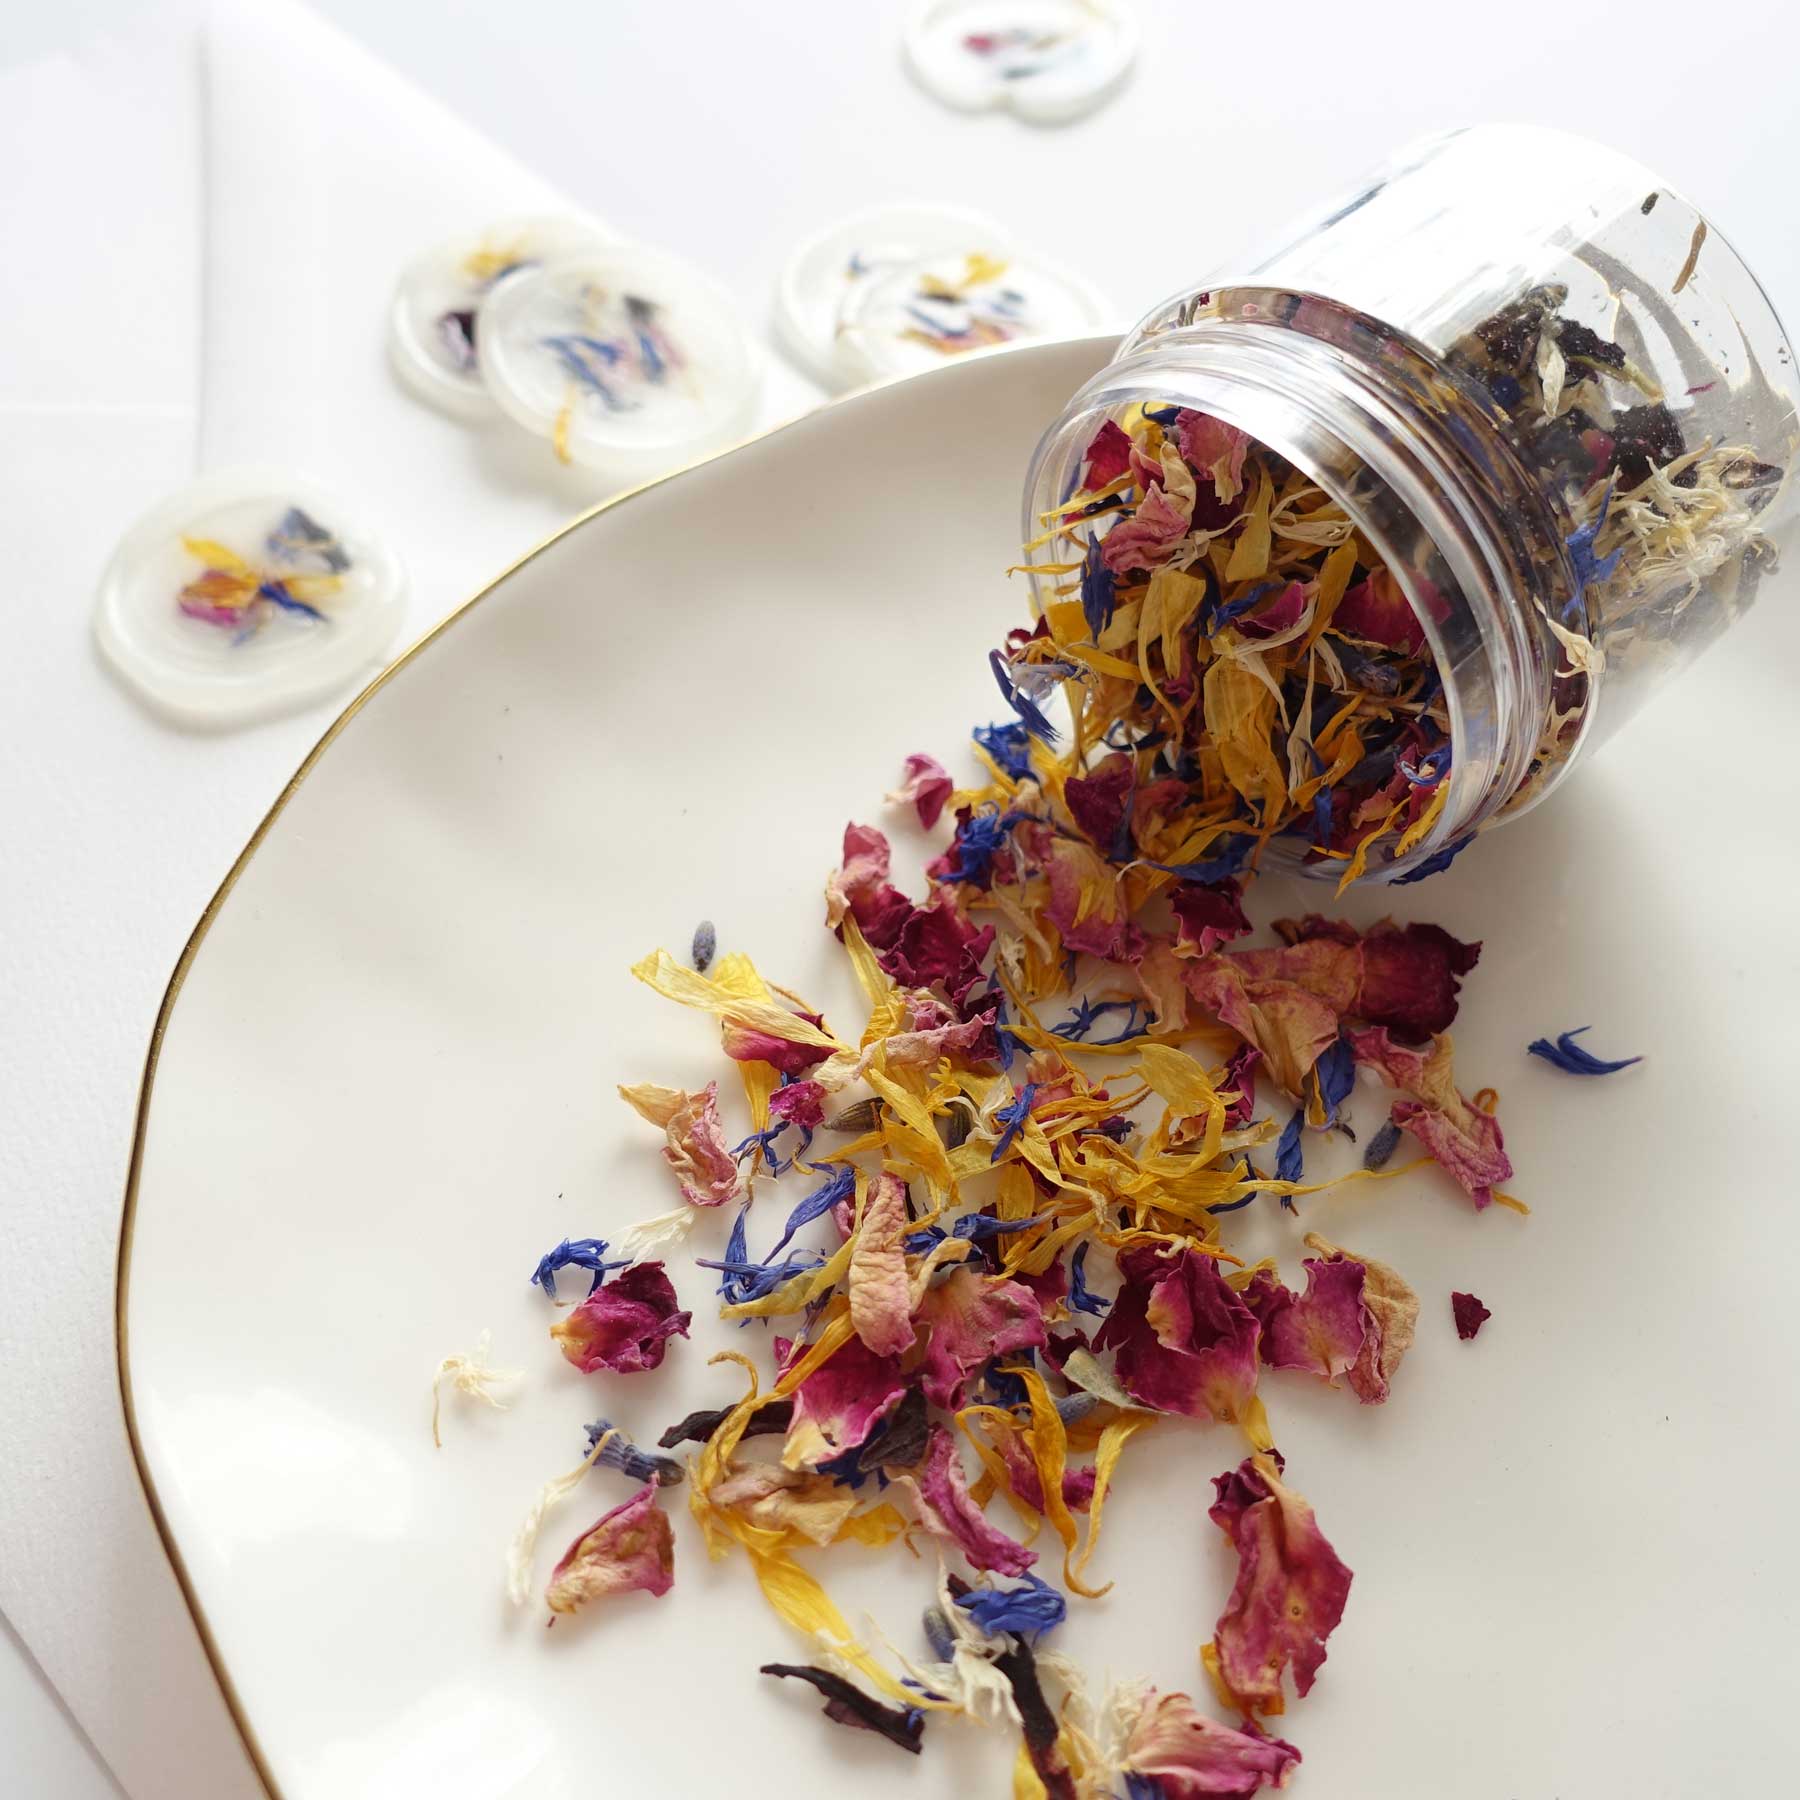 Dried rose lavender calendular flower petals jar Australia wax seal